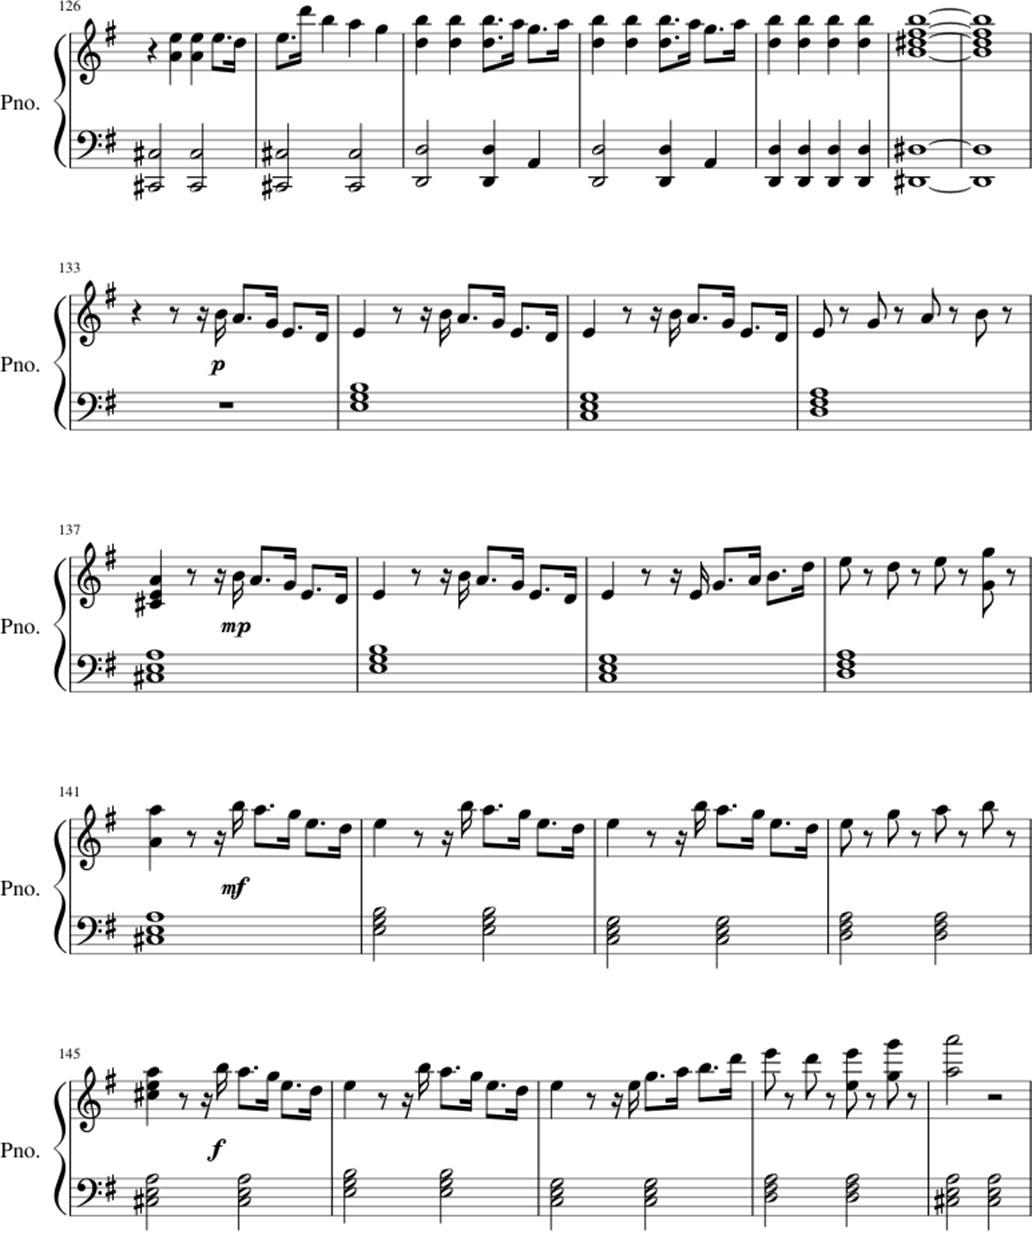 Unity sheet music notes 6